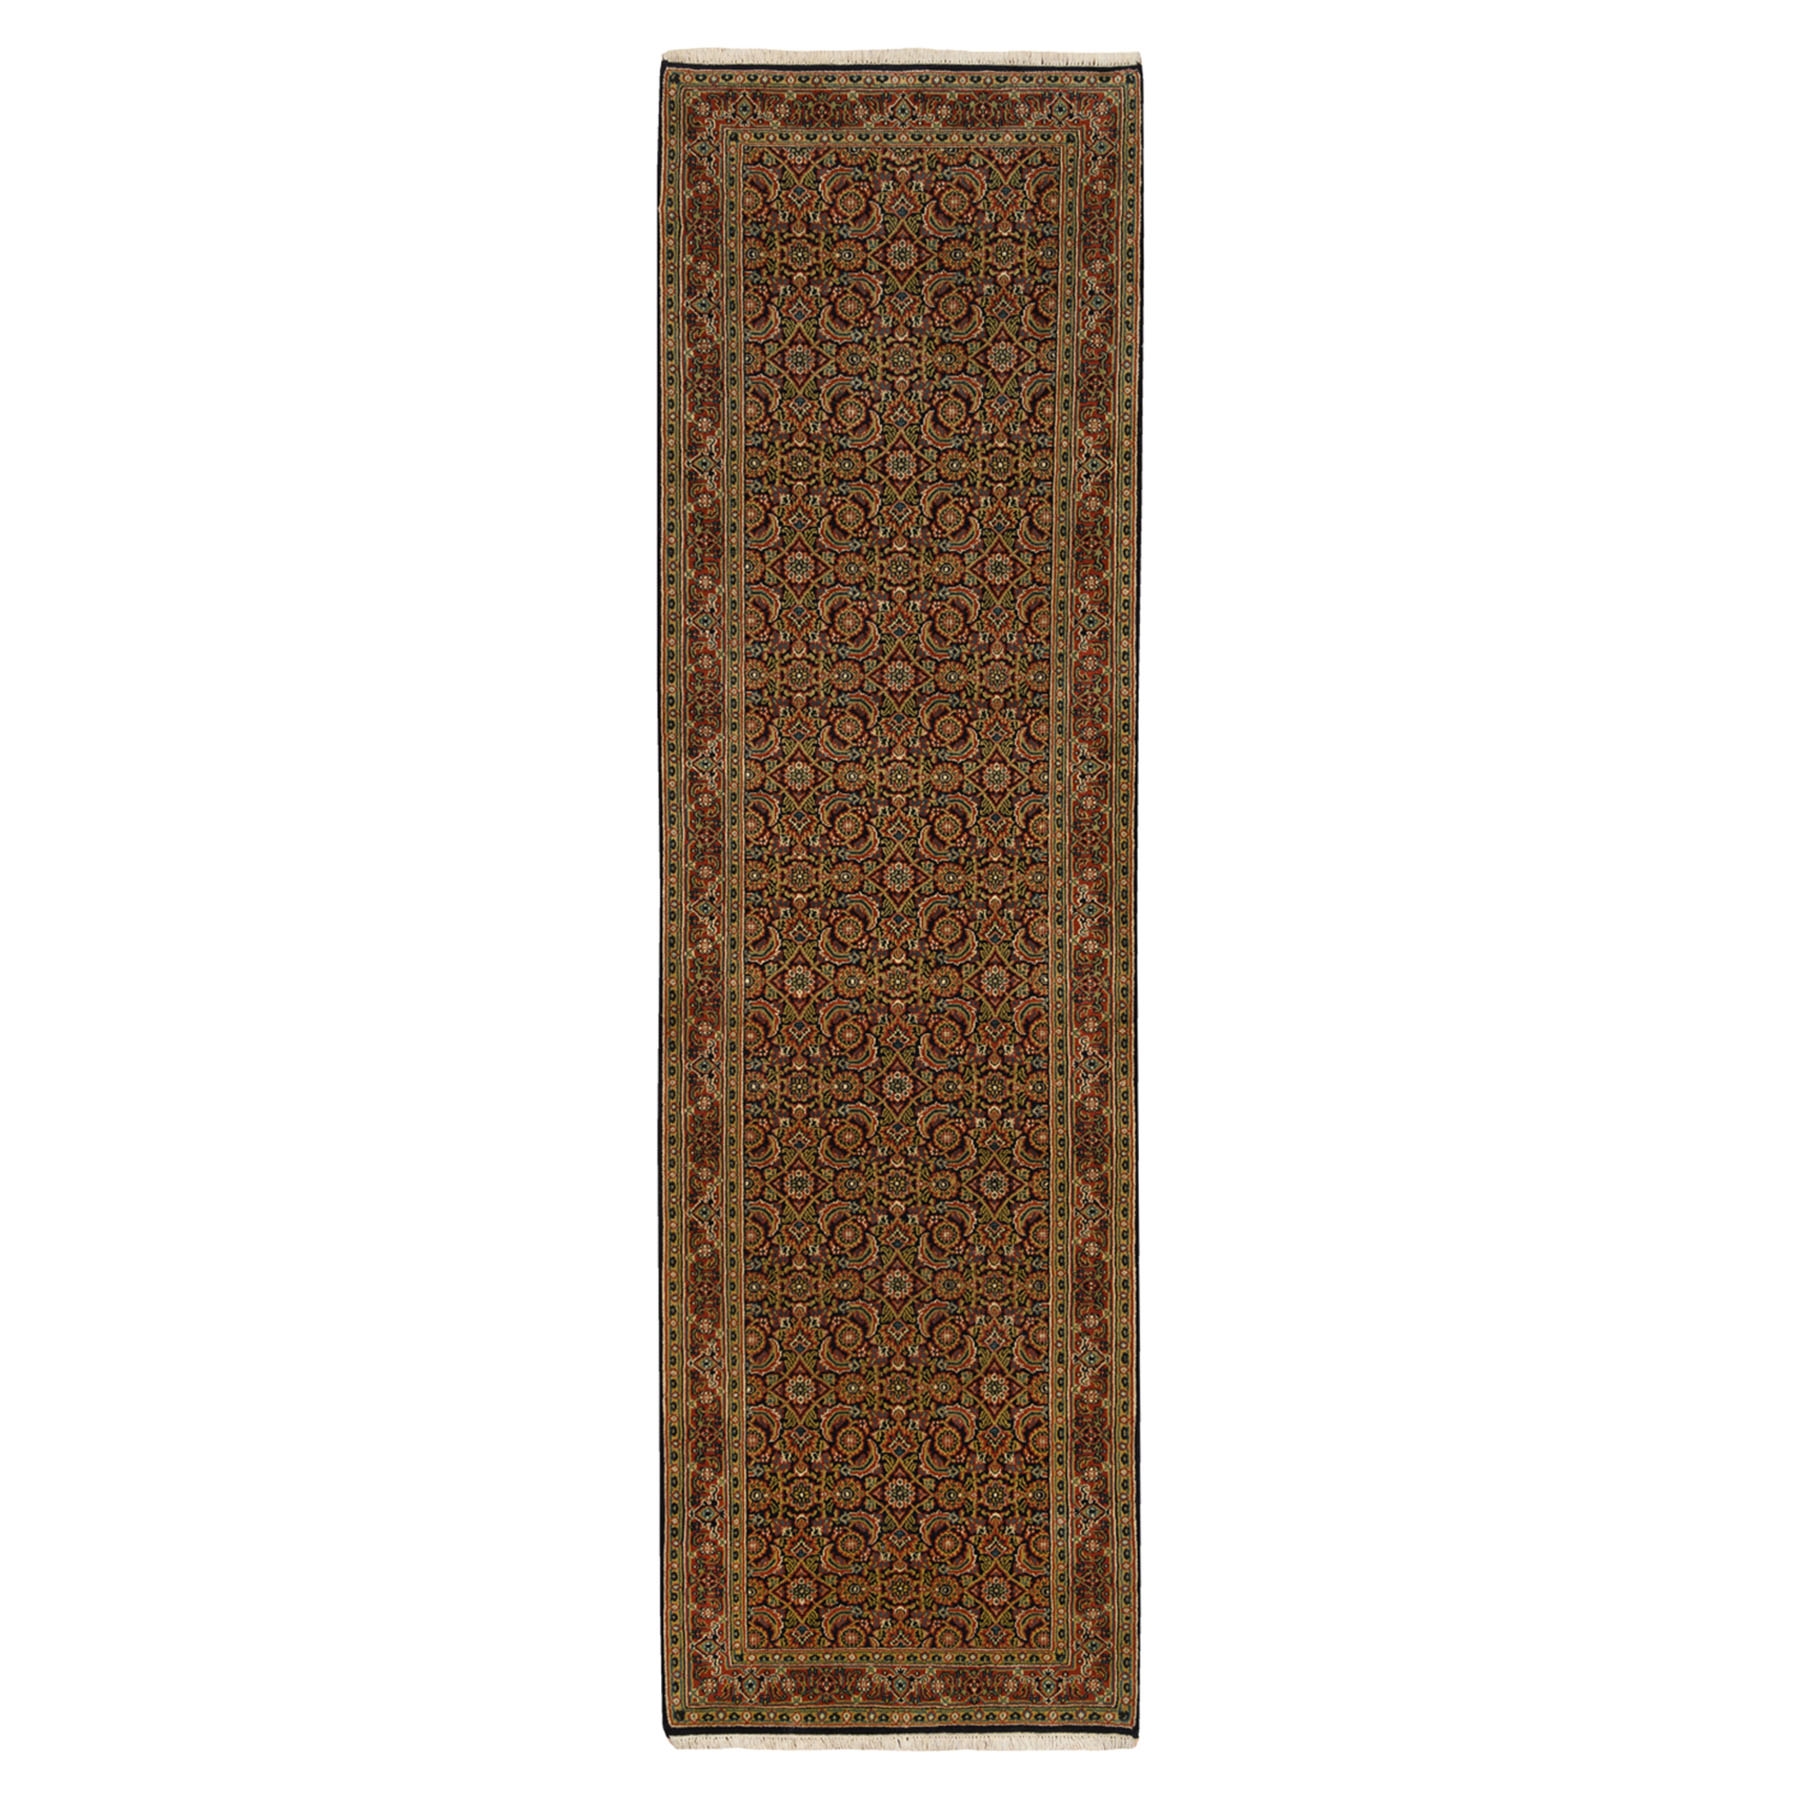 2'8"x9'9" Wool and Silk Herati All Over Fish Design 250 KPSI Hand Woven Dense Weave Oriental Runner Rug 